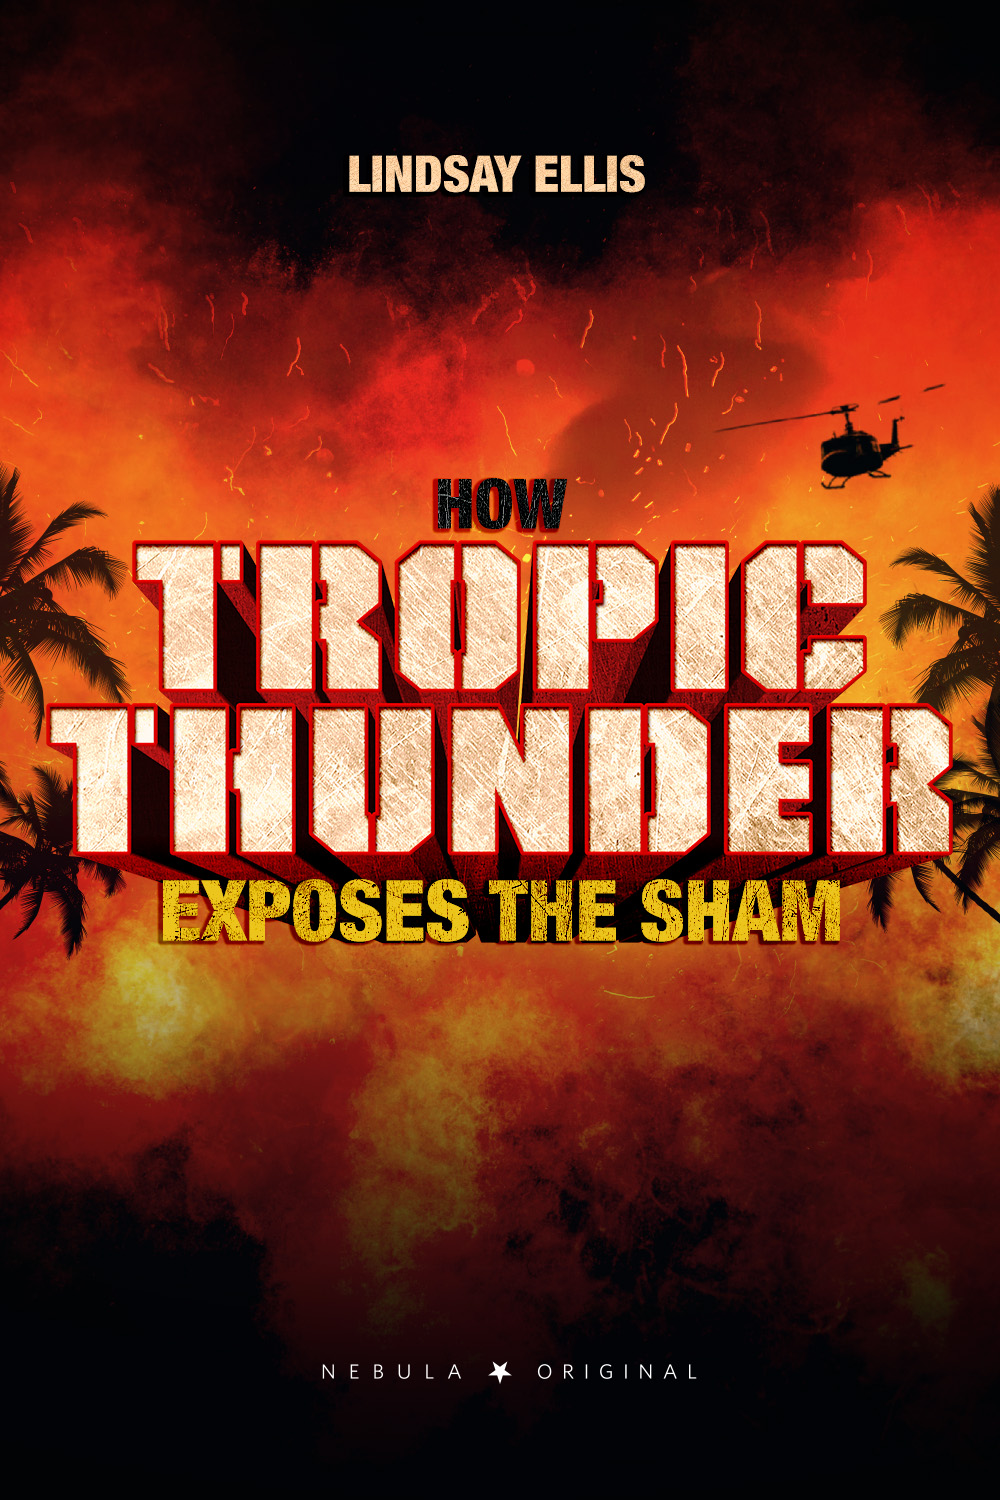 How Tropic Thunder exposes the sham